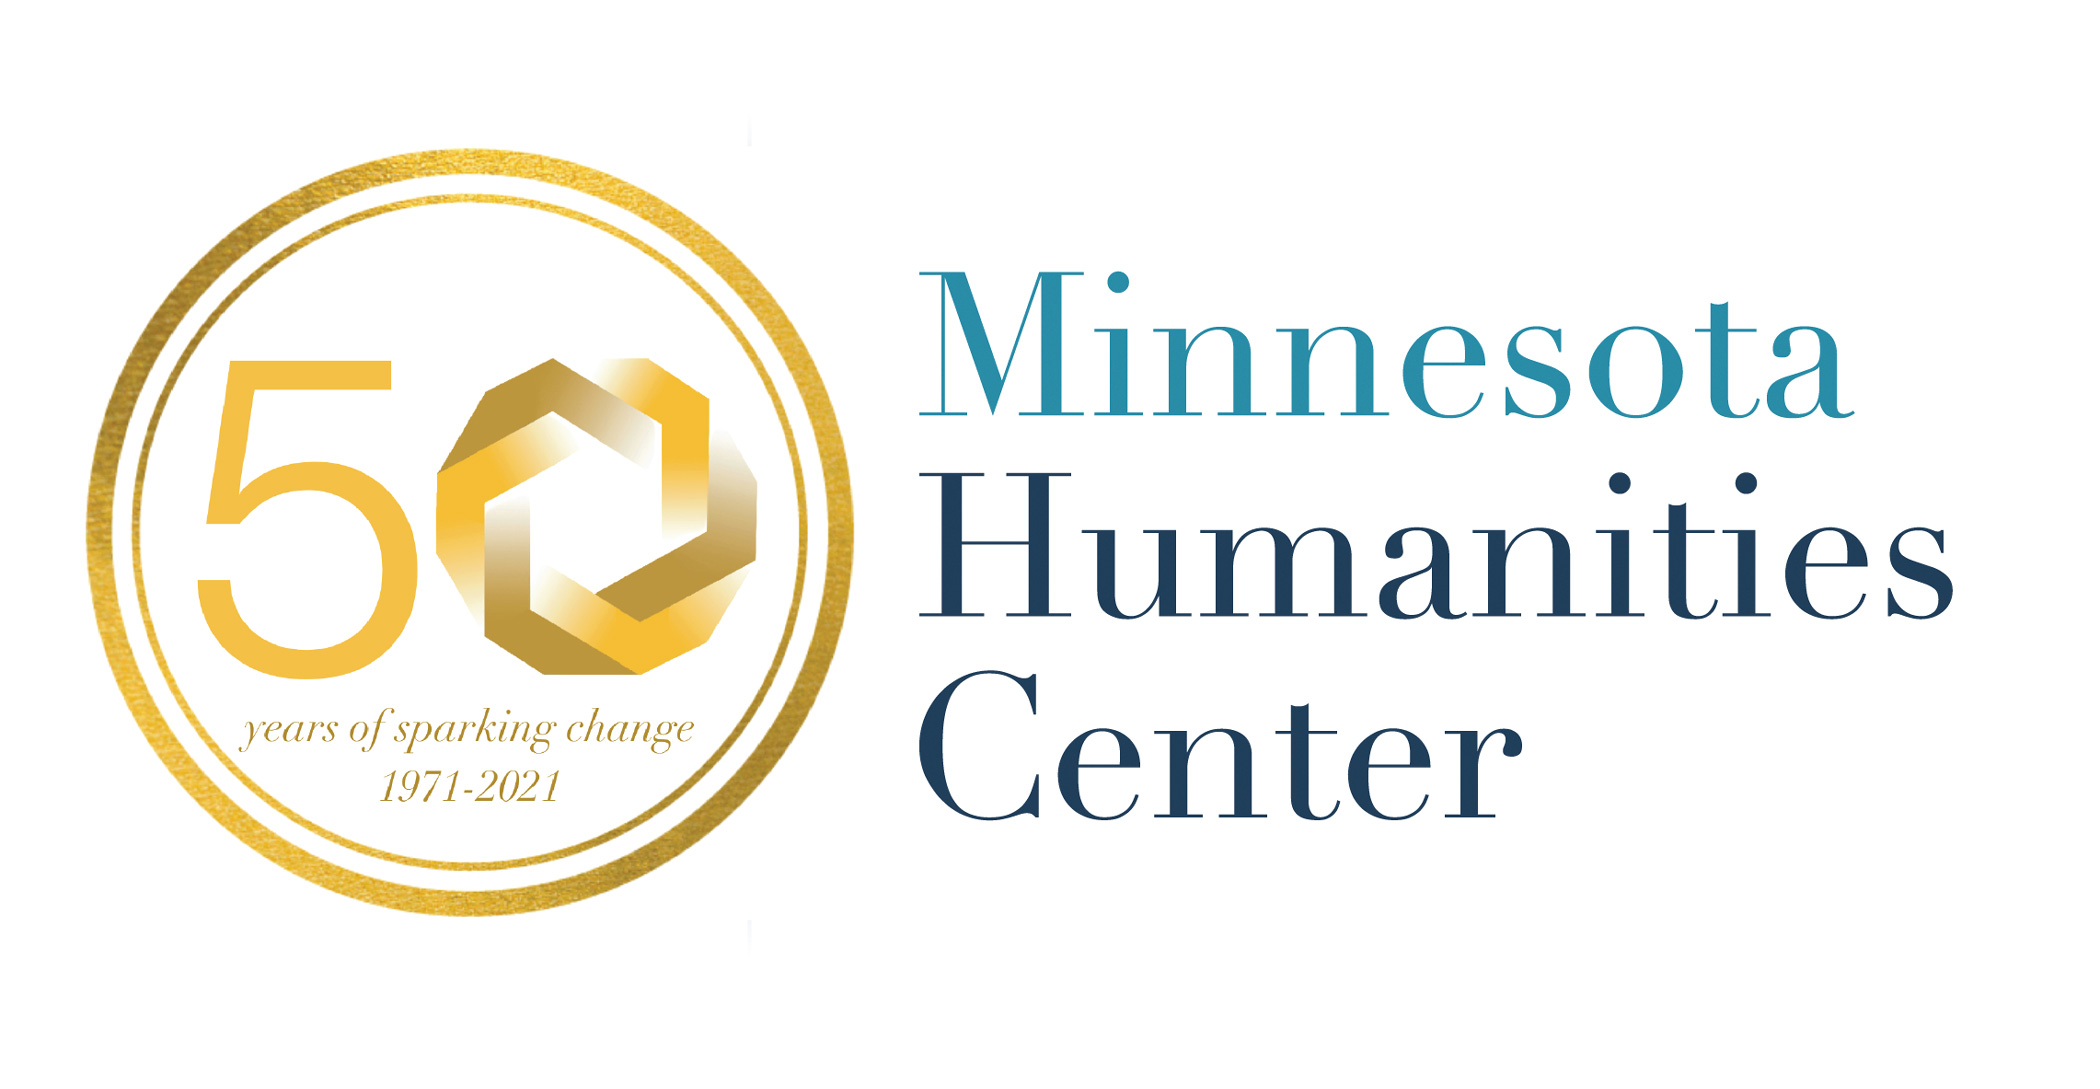 Minnesota Humanities Center logo